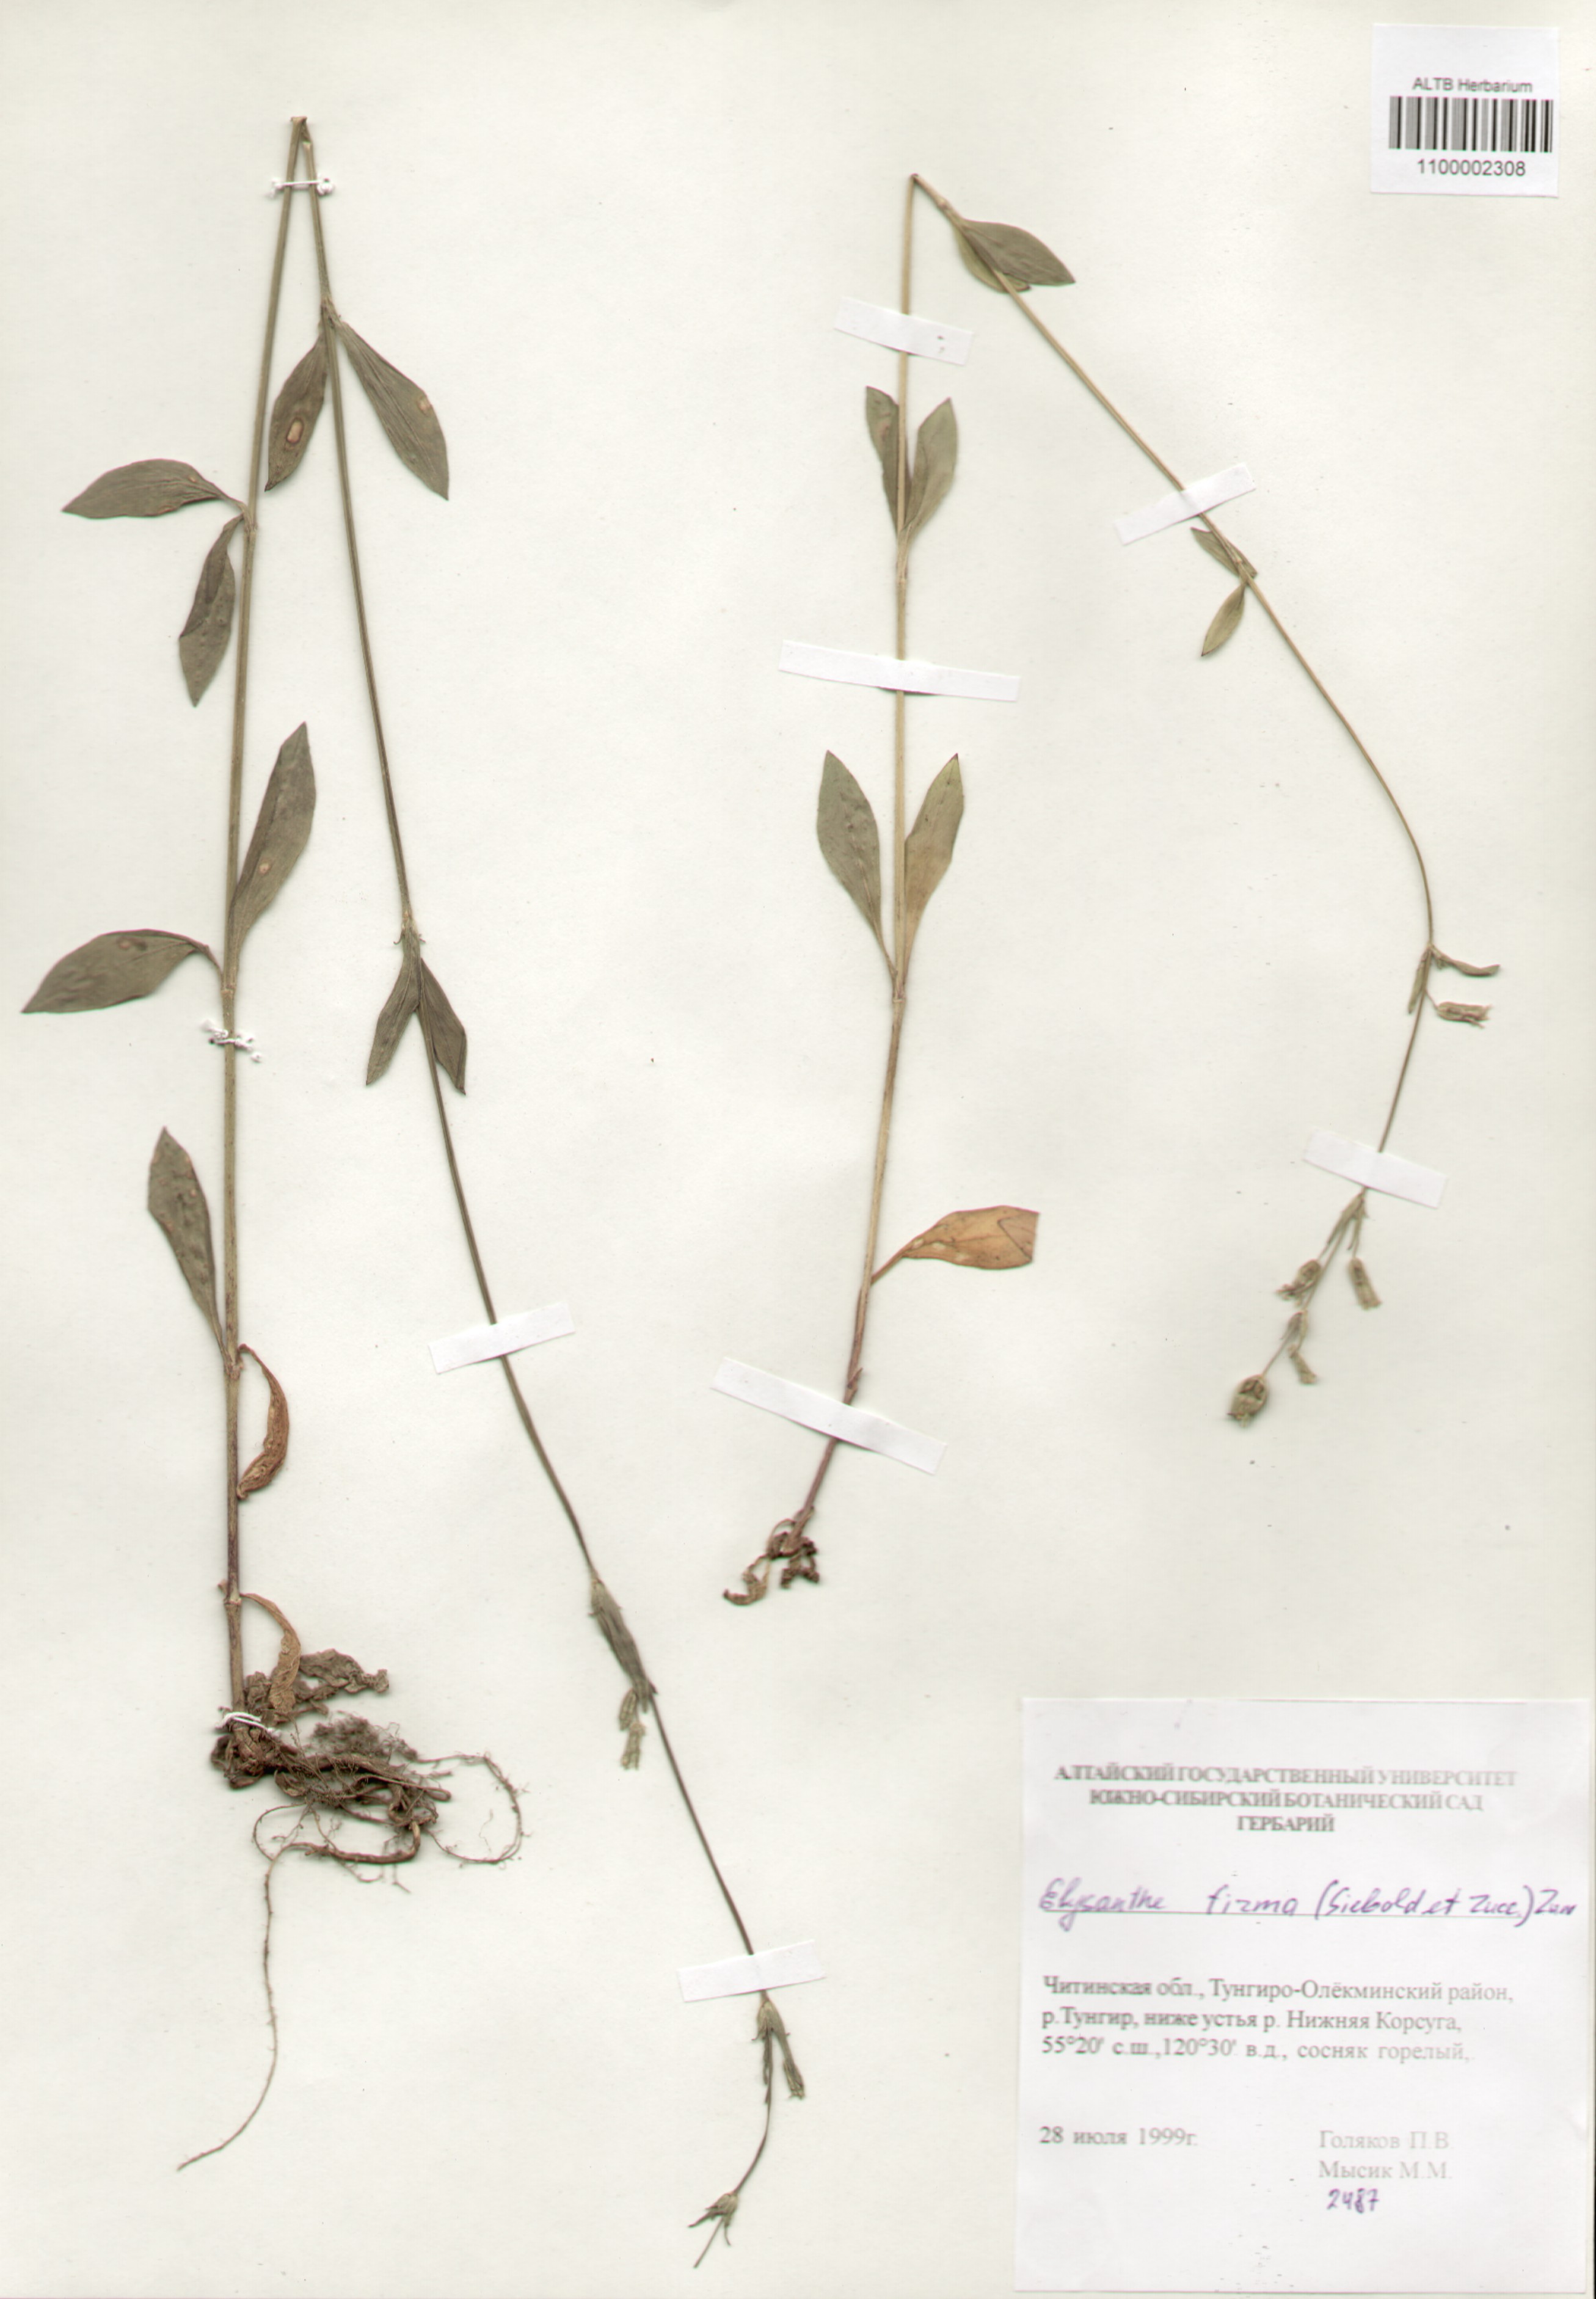 Caryophyllaceae,Elisanthe firma (Siebdd et Zucc) Zuev.